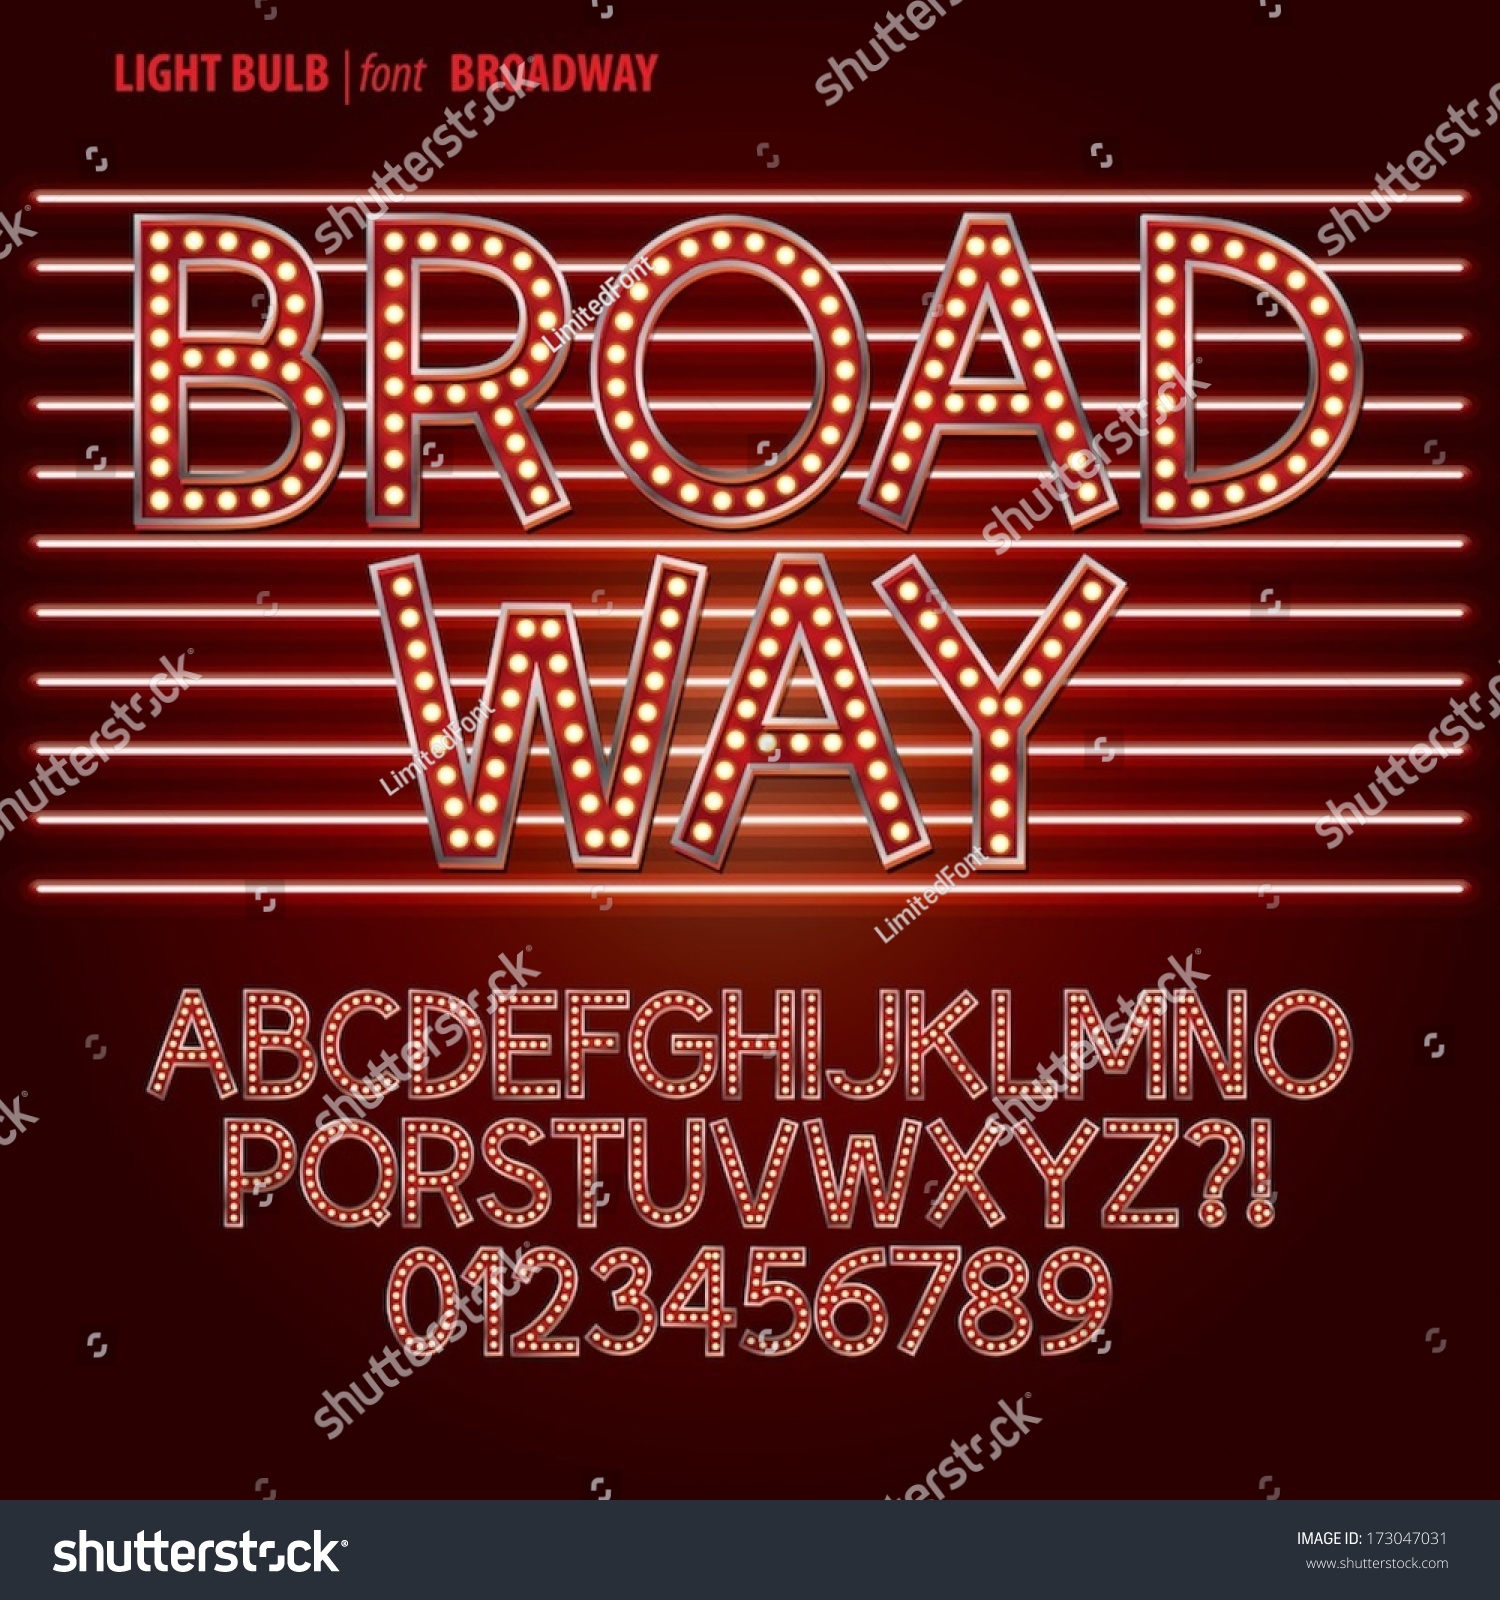 SVG of Red Broadway Light Bulb Alphabet and Digit Vector svg